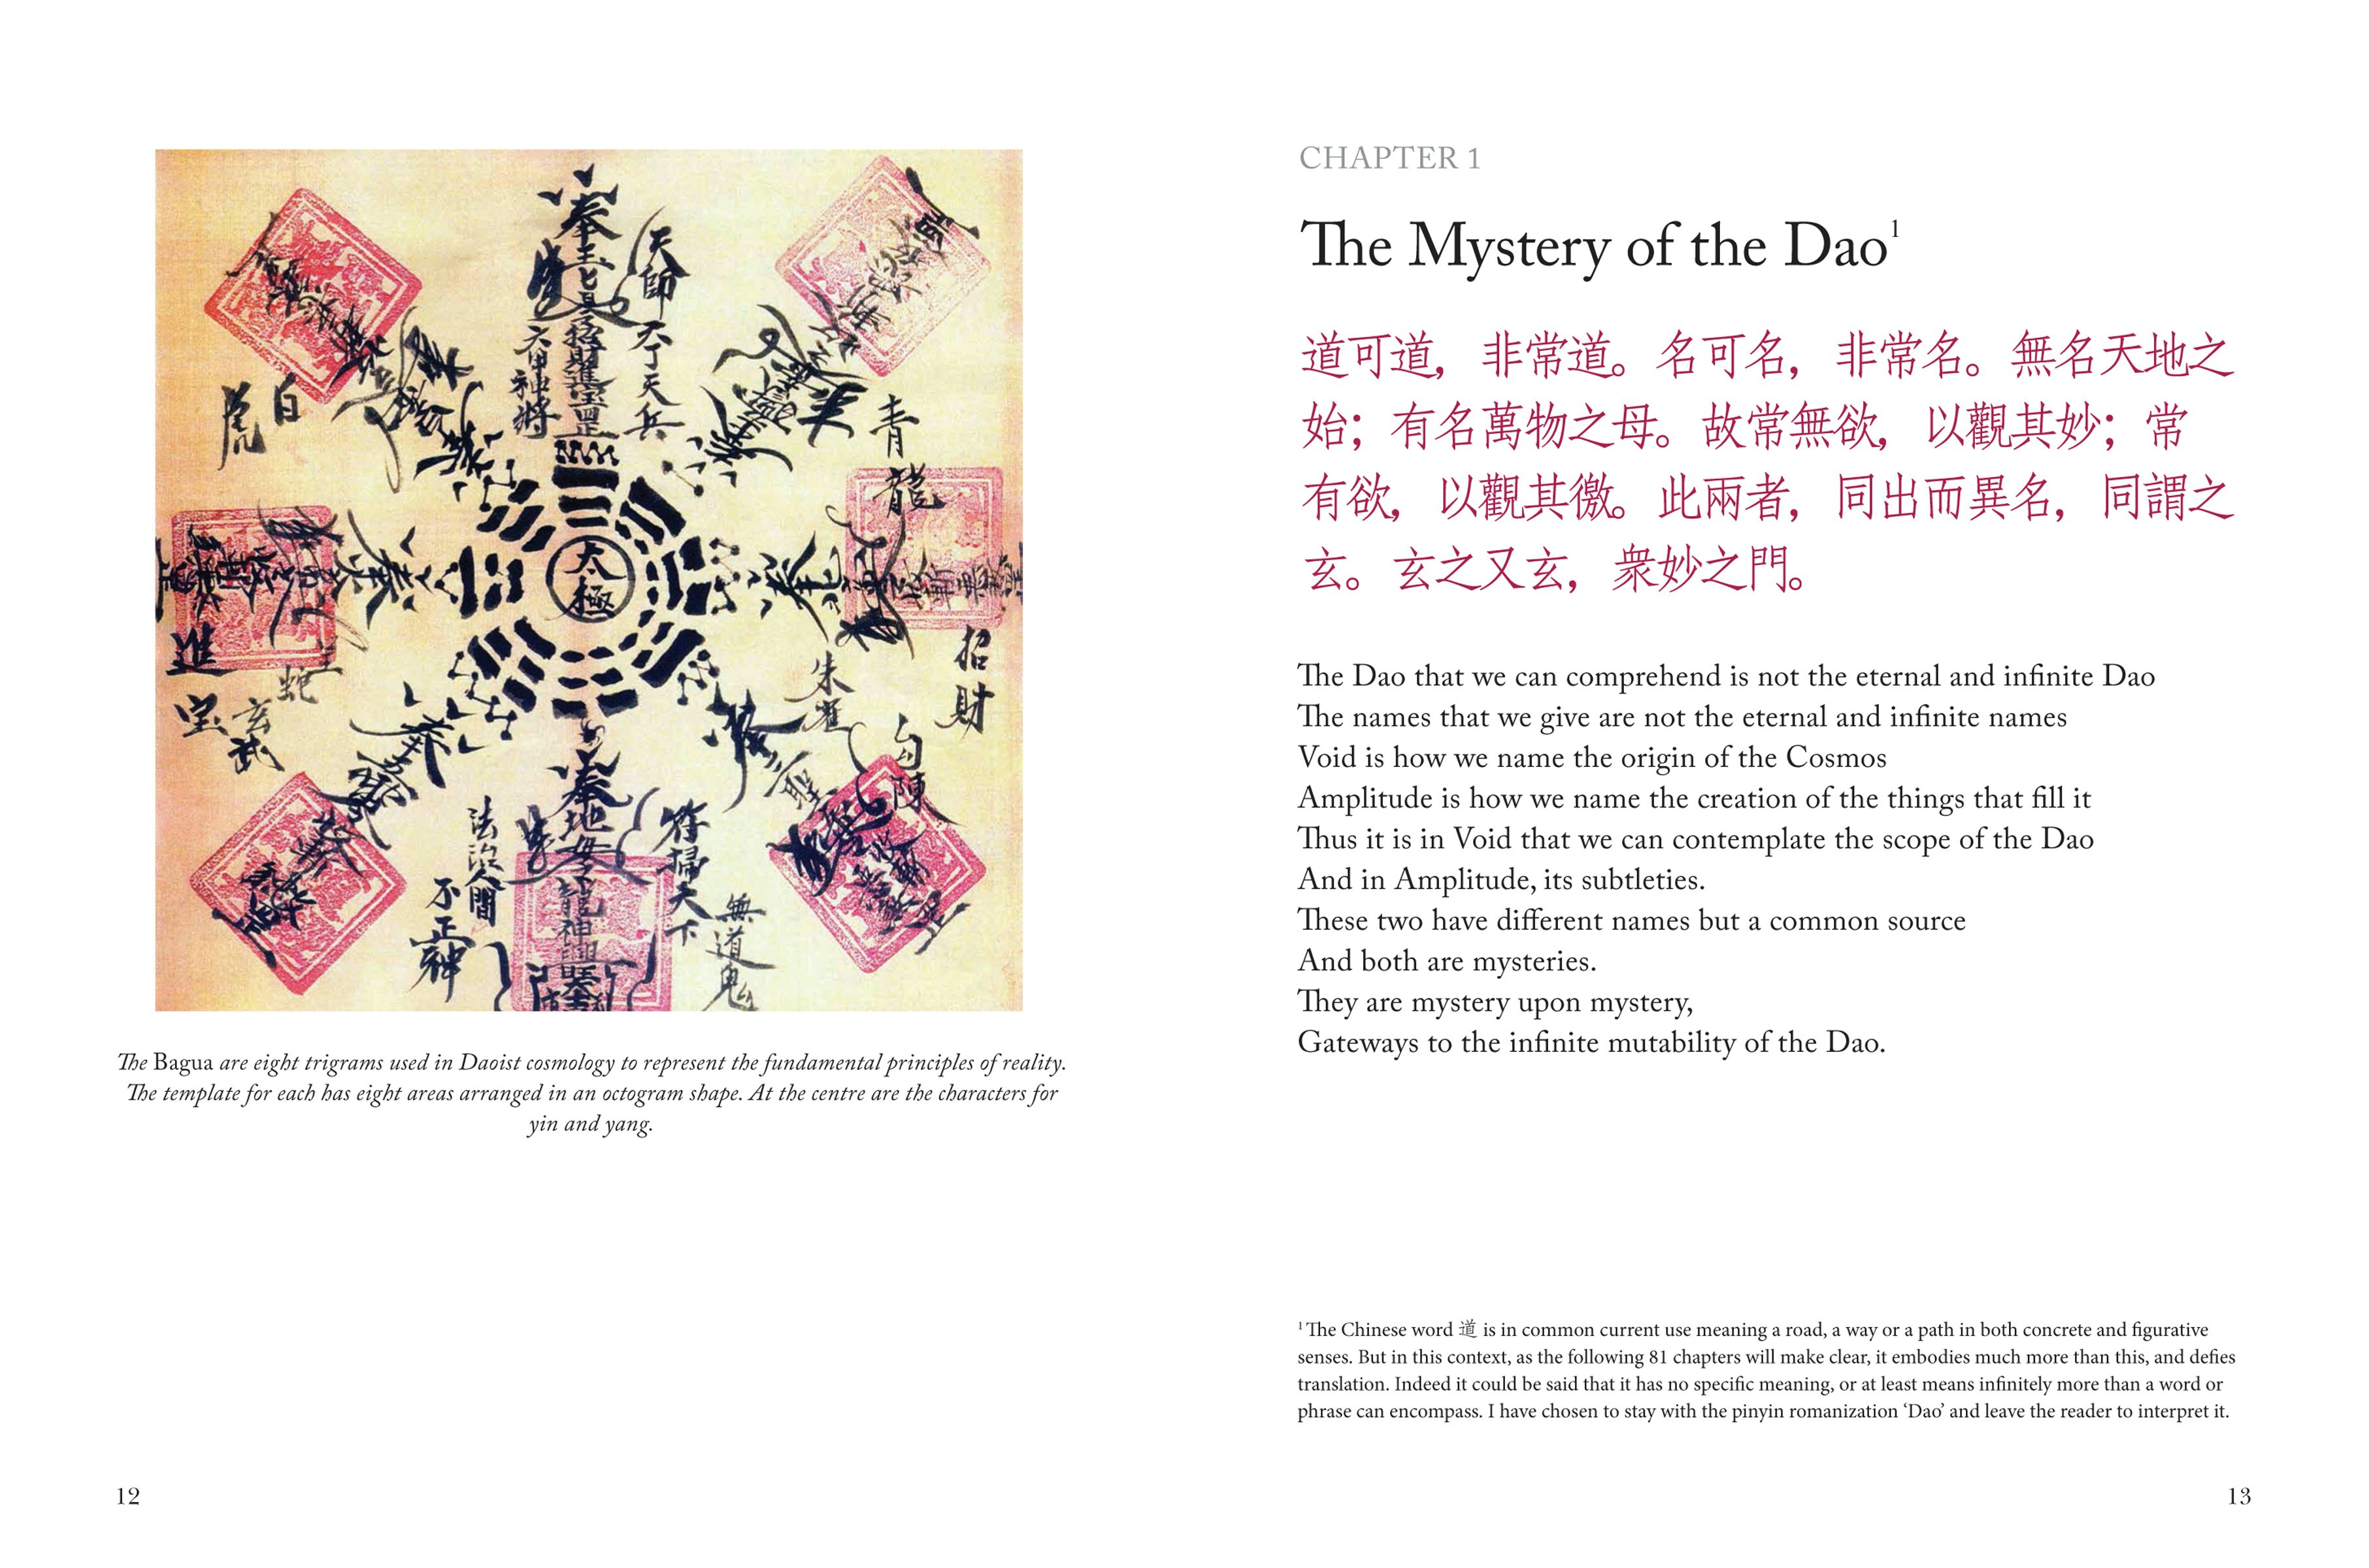 Tao Te Ching (Pocket Edition) by Lao Tzu: 9781838863623 - Union 